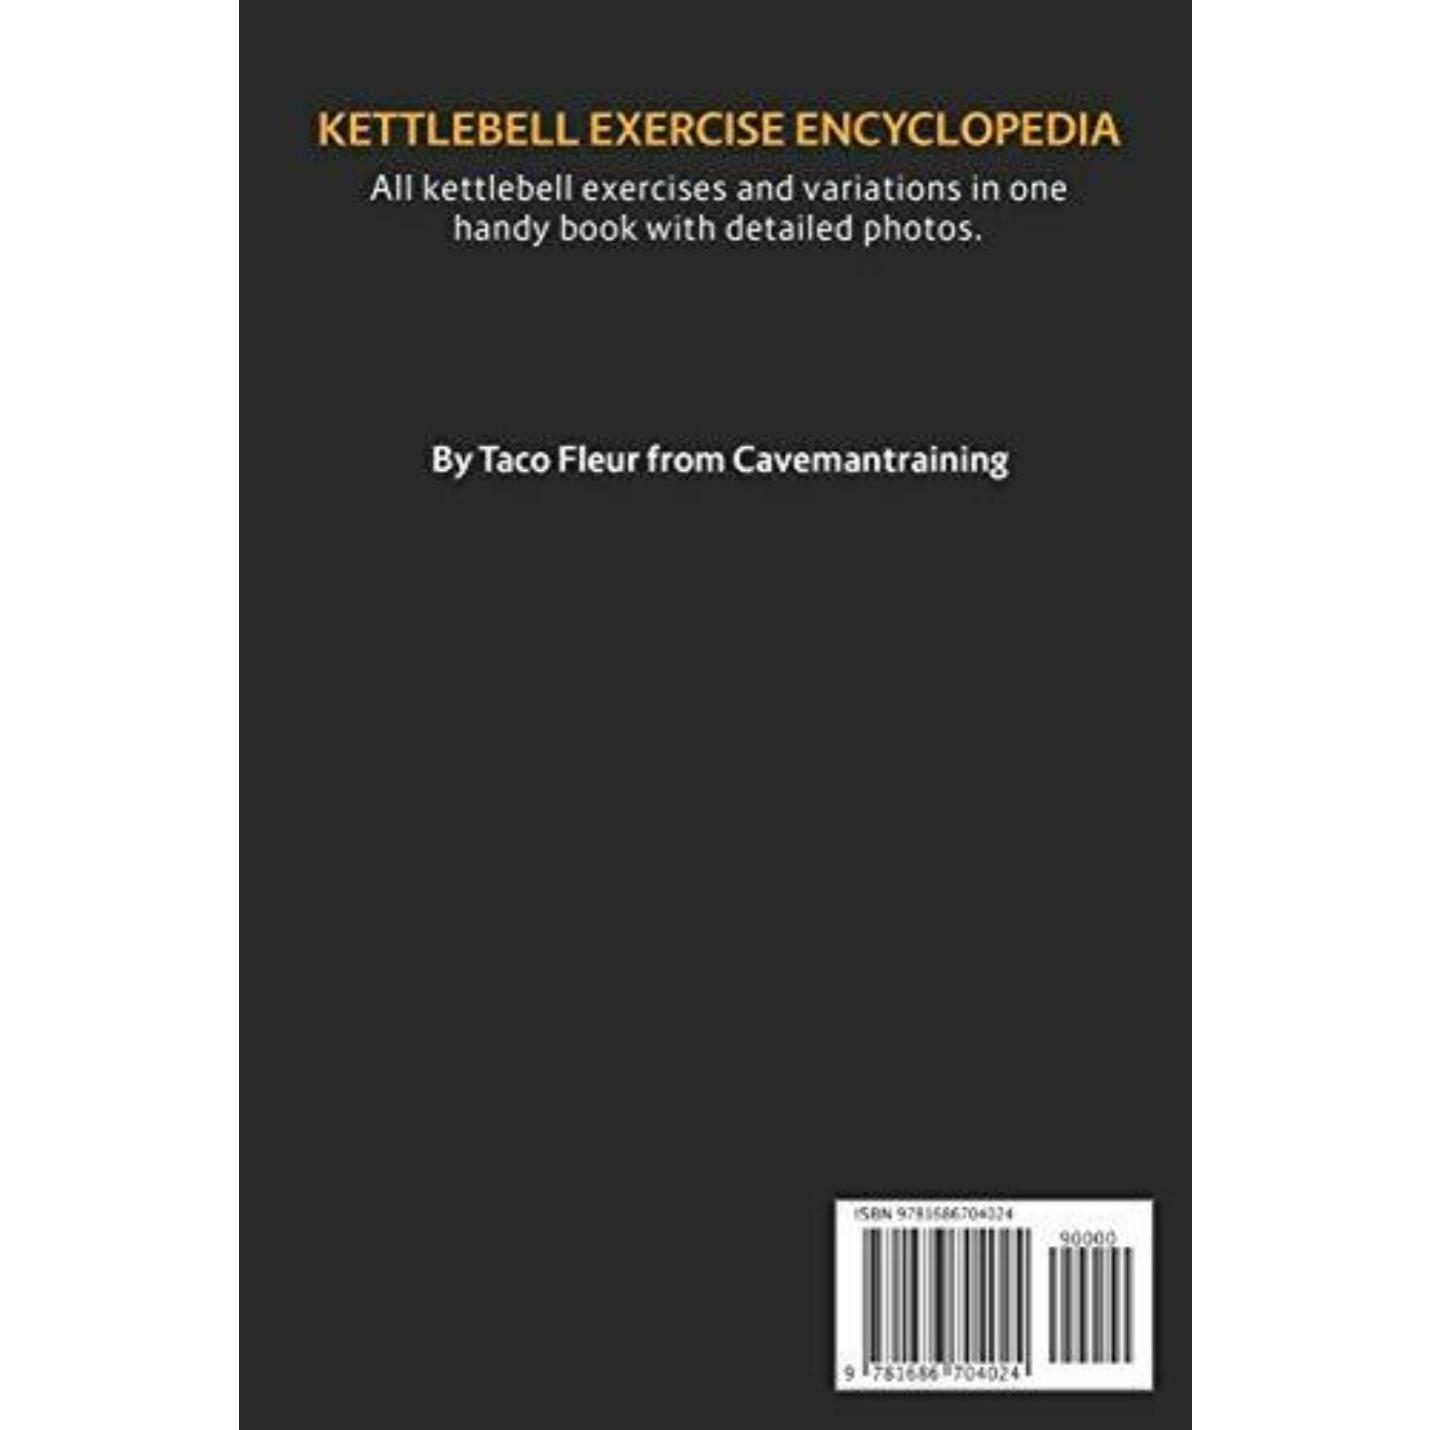 Kettlebell Exercise Encyclopedia VOL. 2: Kettlebell isometric, kneeling, lift, and lunge exercise variations - kettlebell oefeningen - happygetfit.com